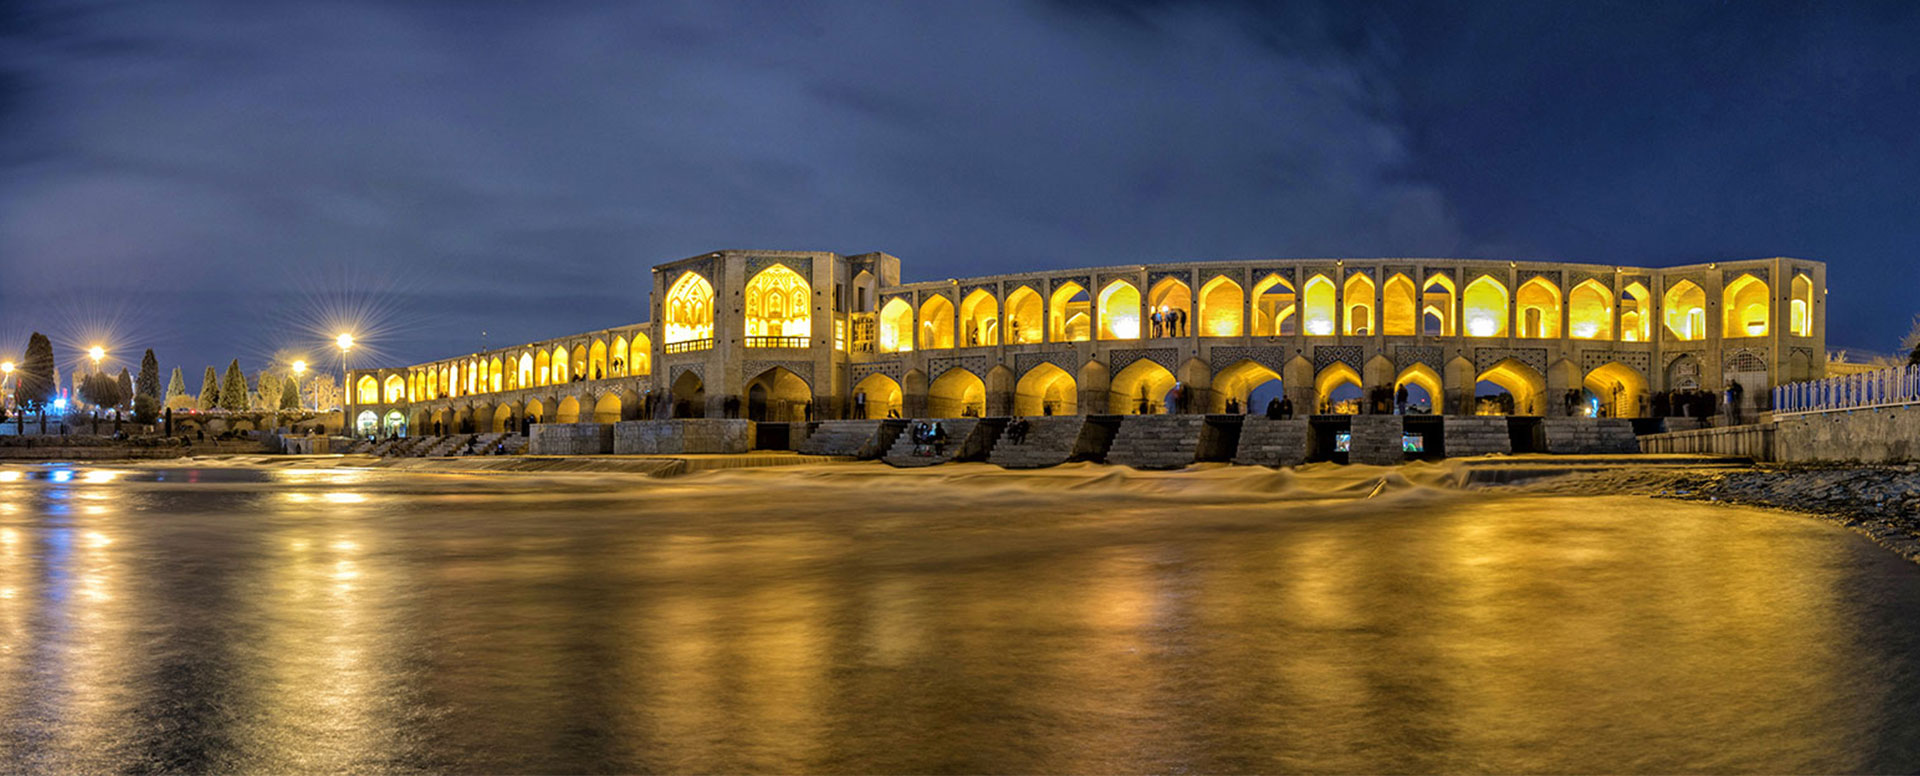 ا پلی یورتان اصفهان